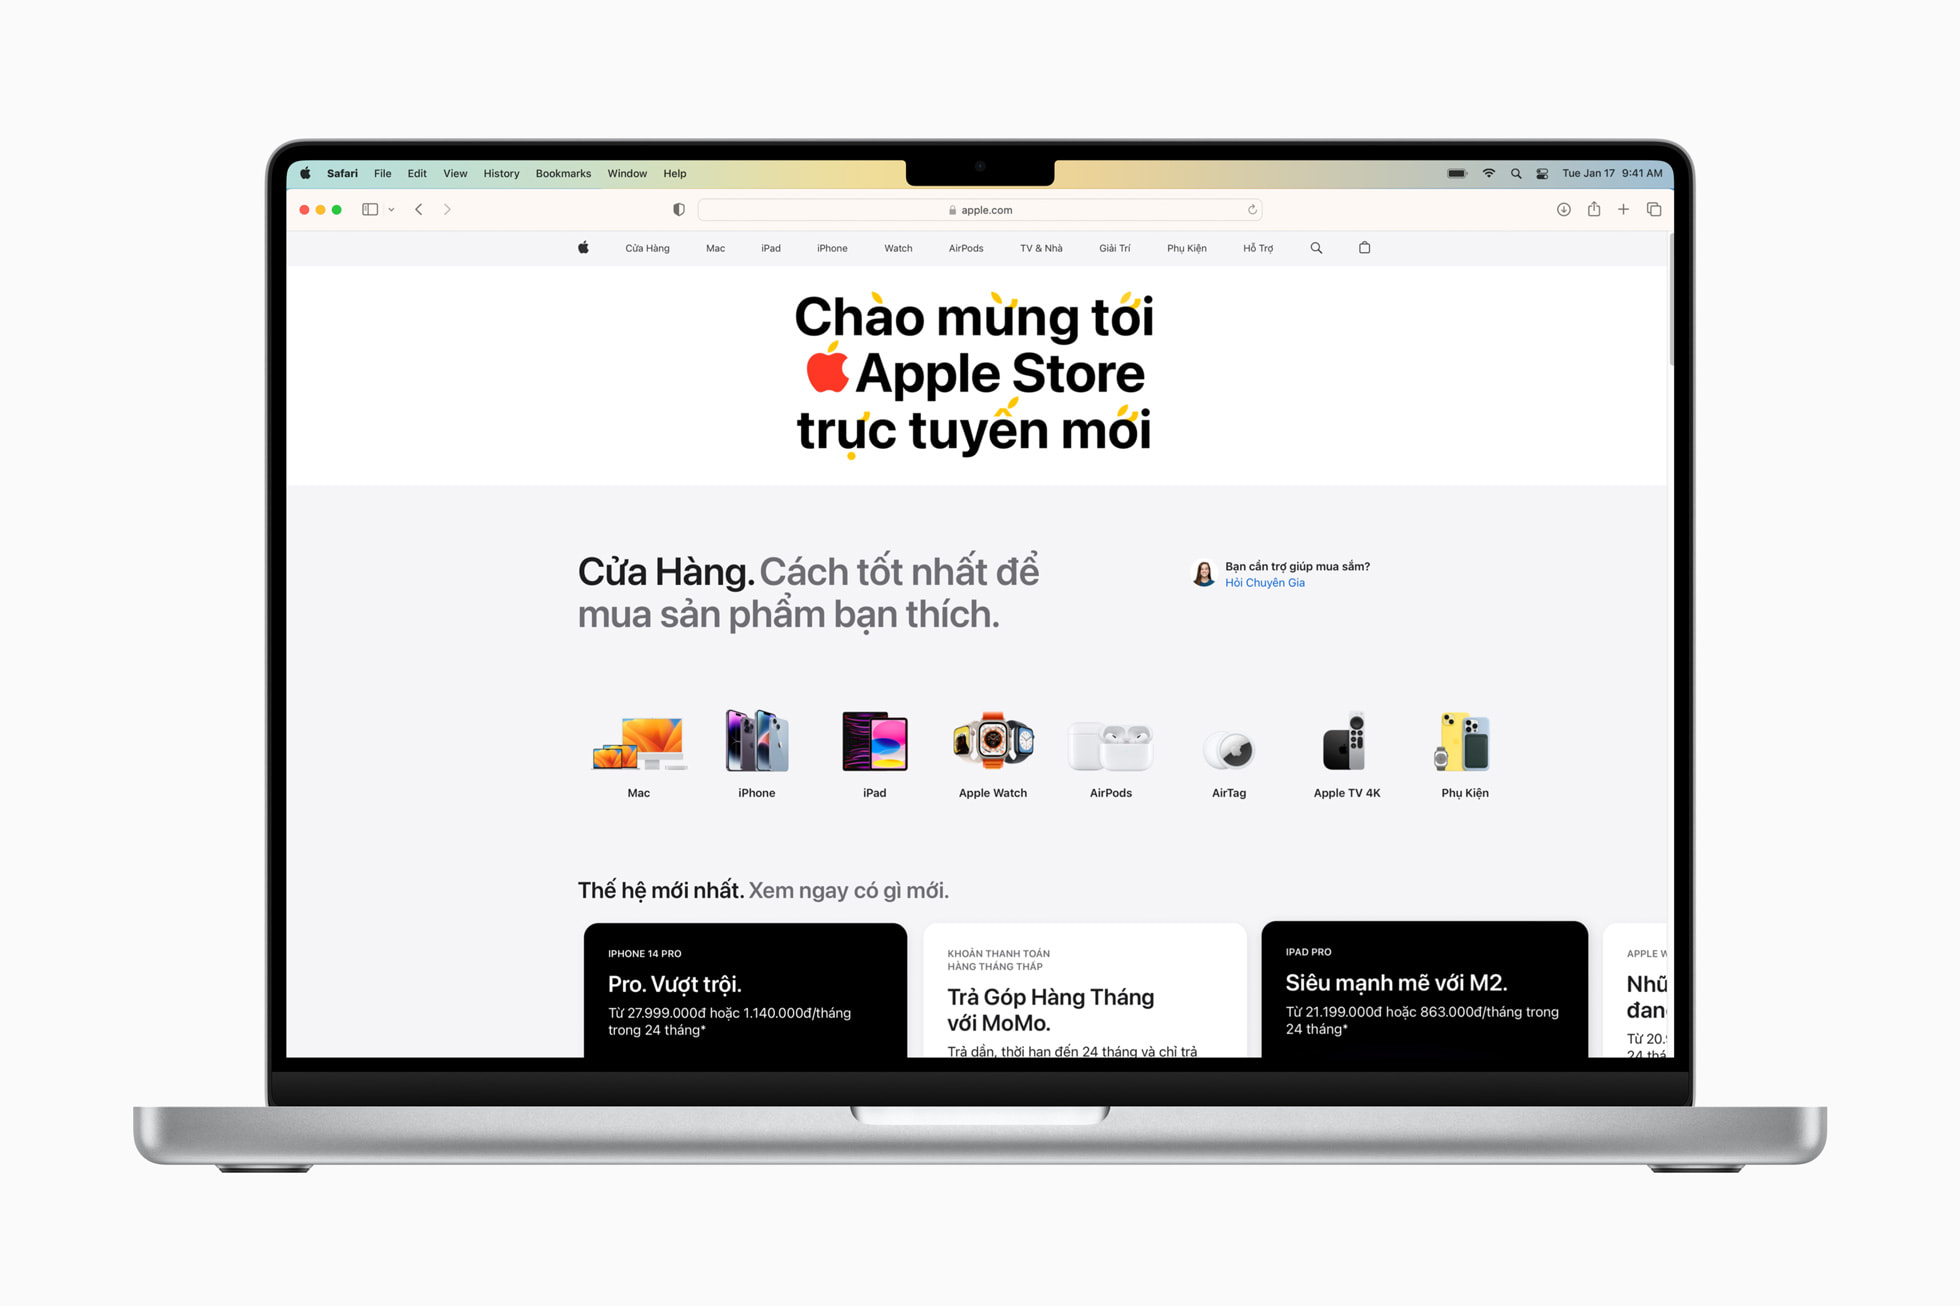 Apple launches online store in Vietnam